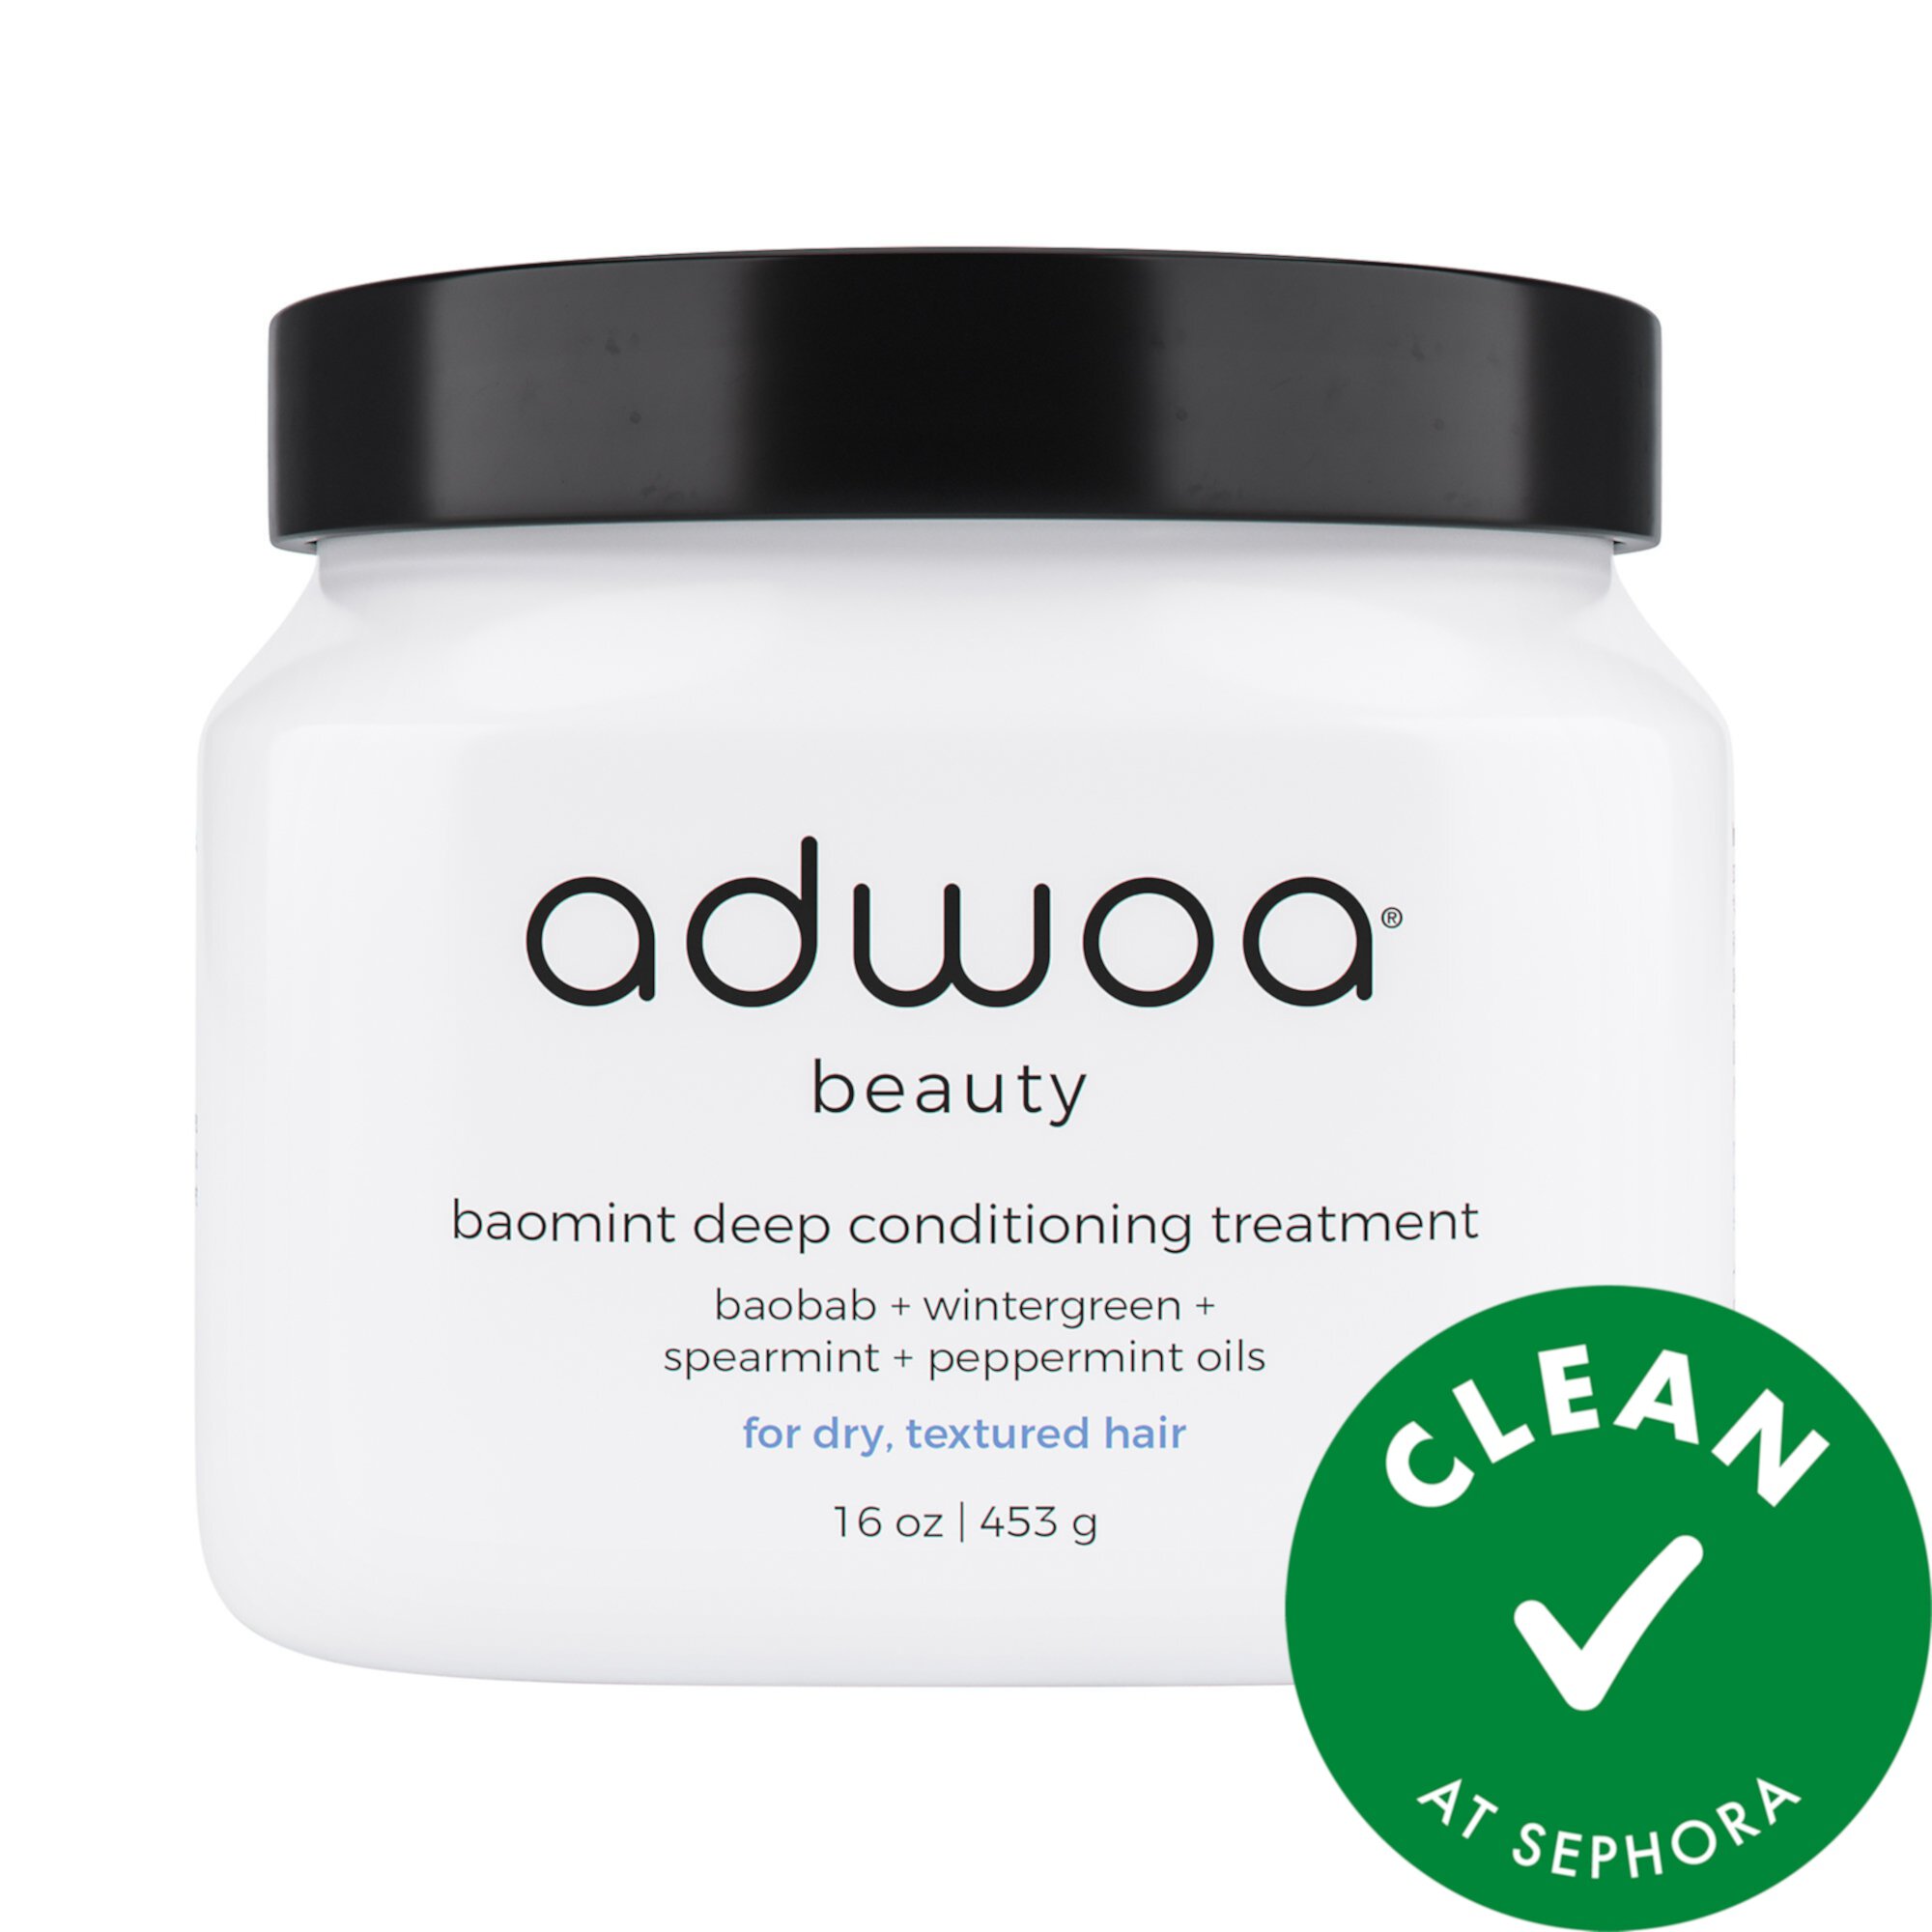 Baomint™ Deep Conditioning Treatment Adwoa beauty